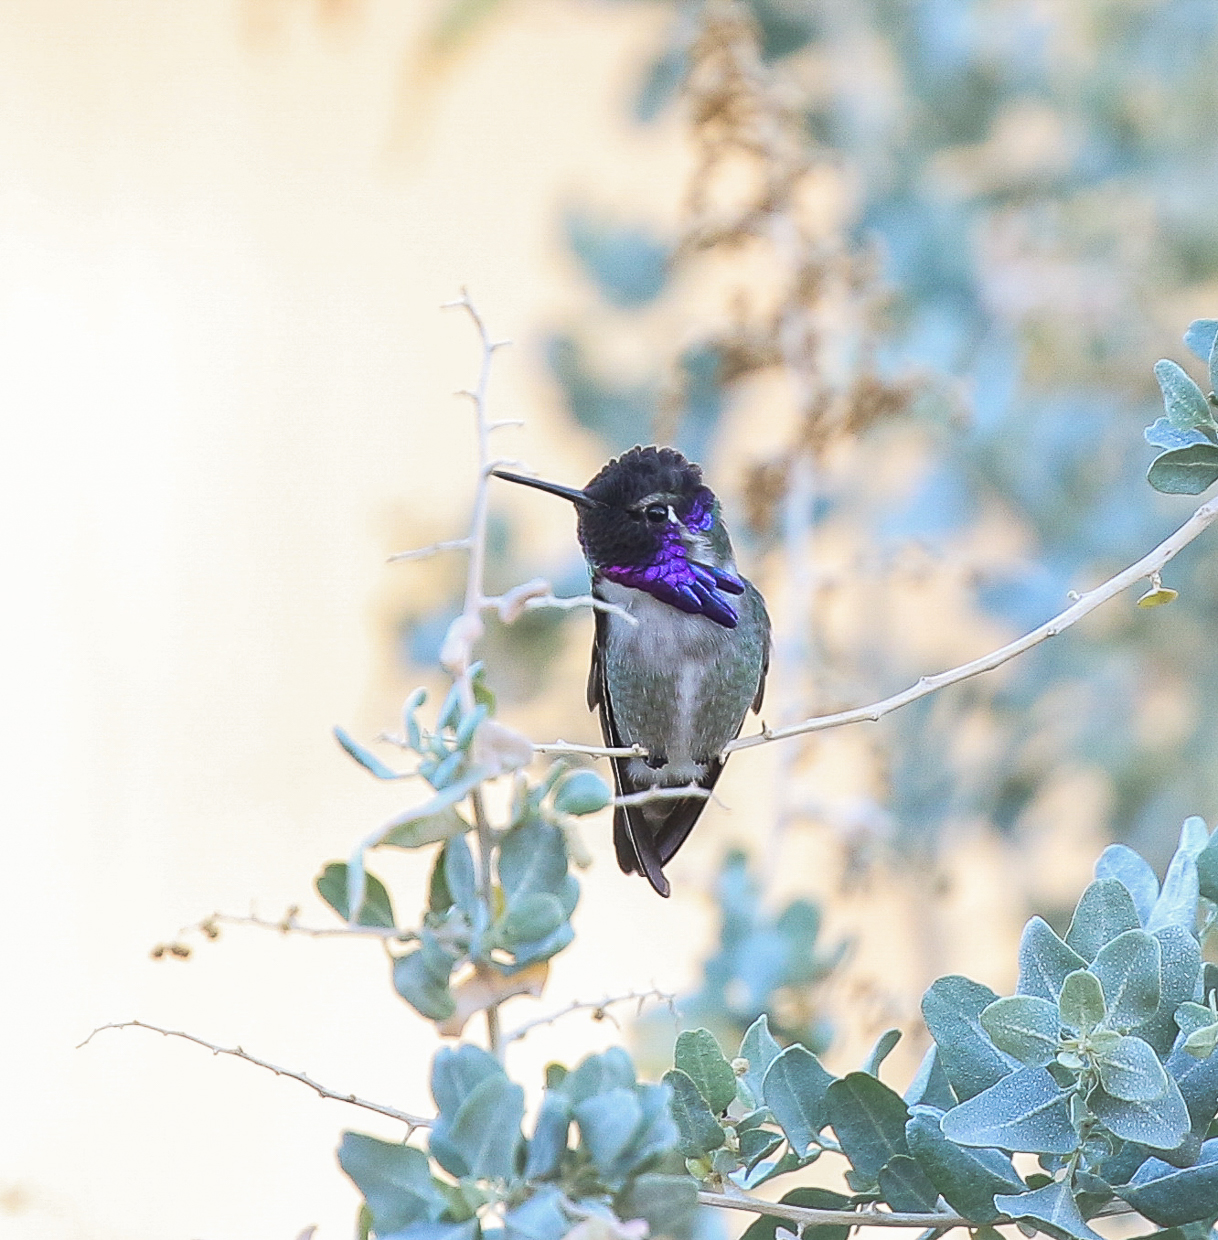 Costa'a Hummingbird